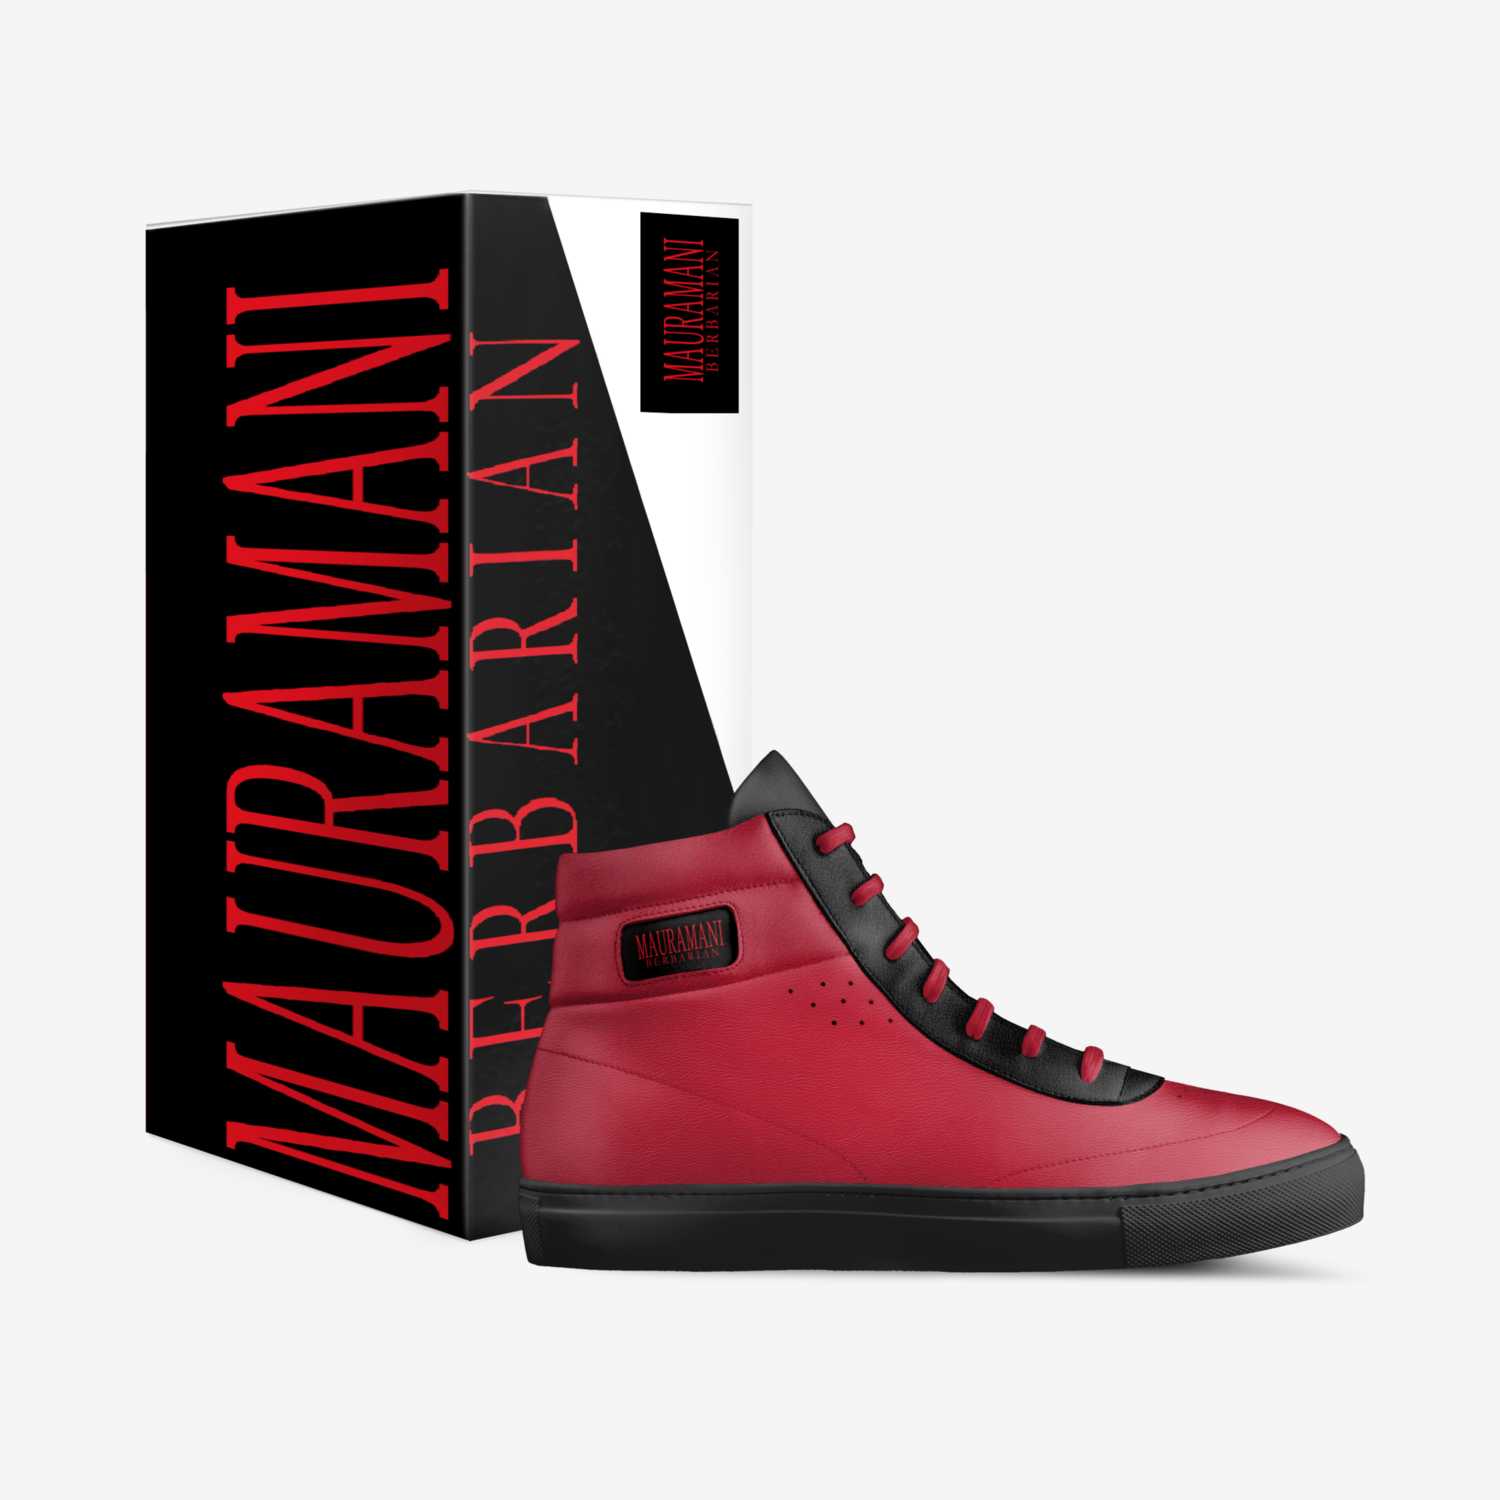 MAURAMANI custom made in Italy shoes by Amaanah Taqwaamani | Box view